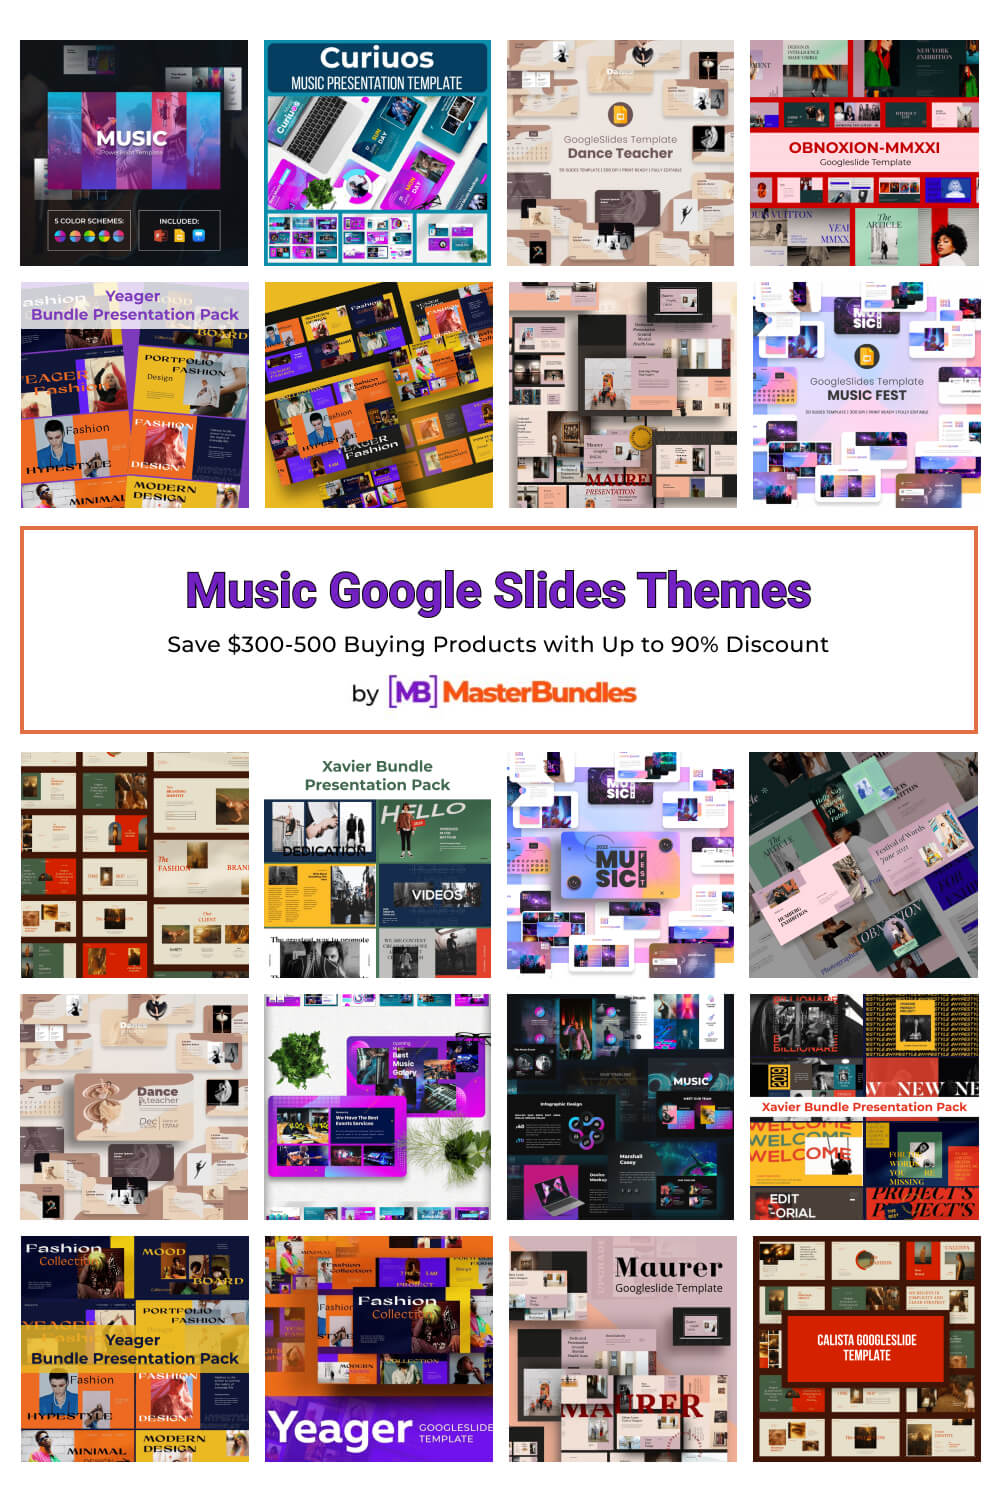 music google slides themes pinterest image.